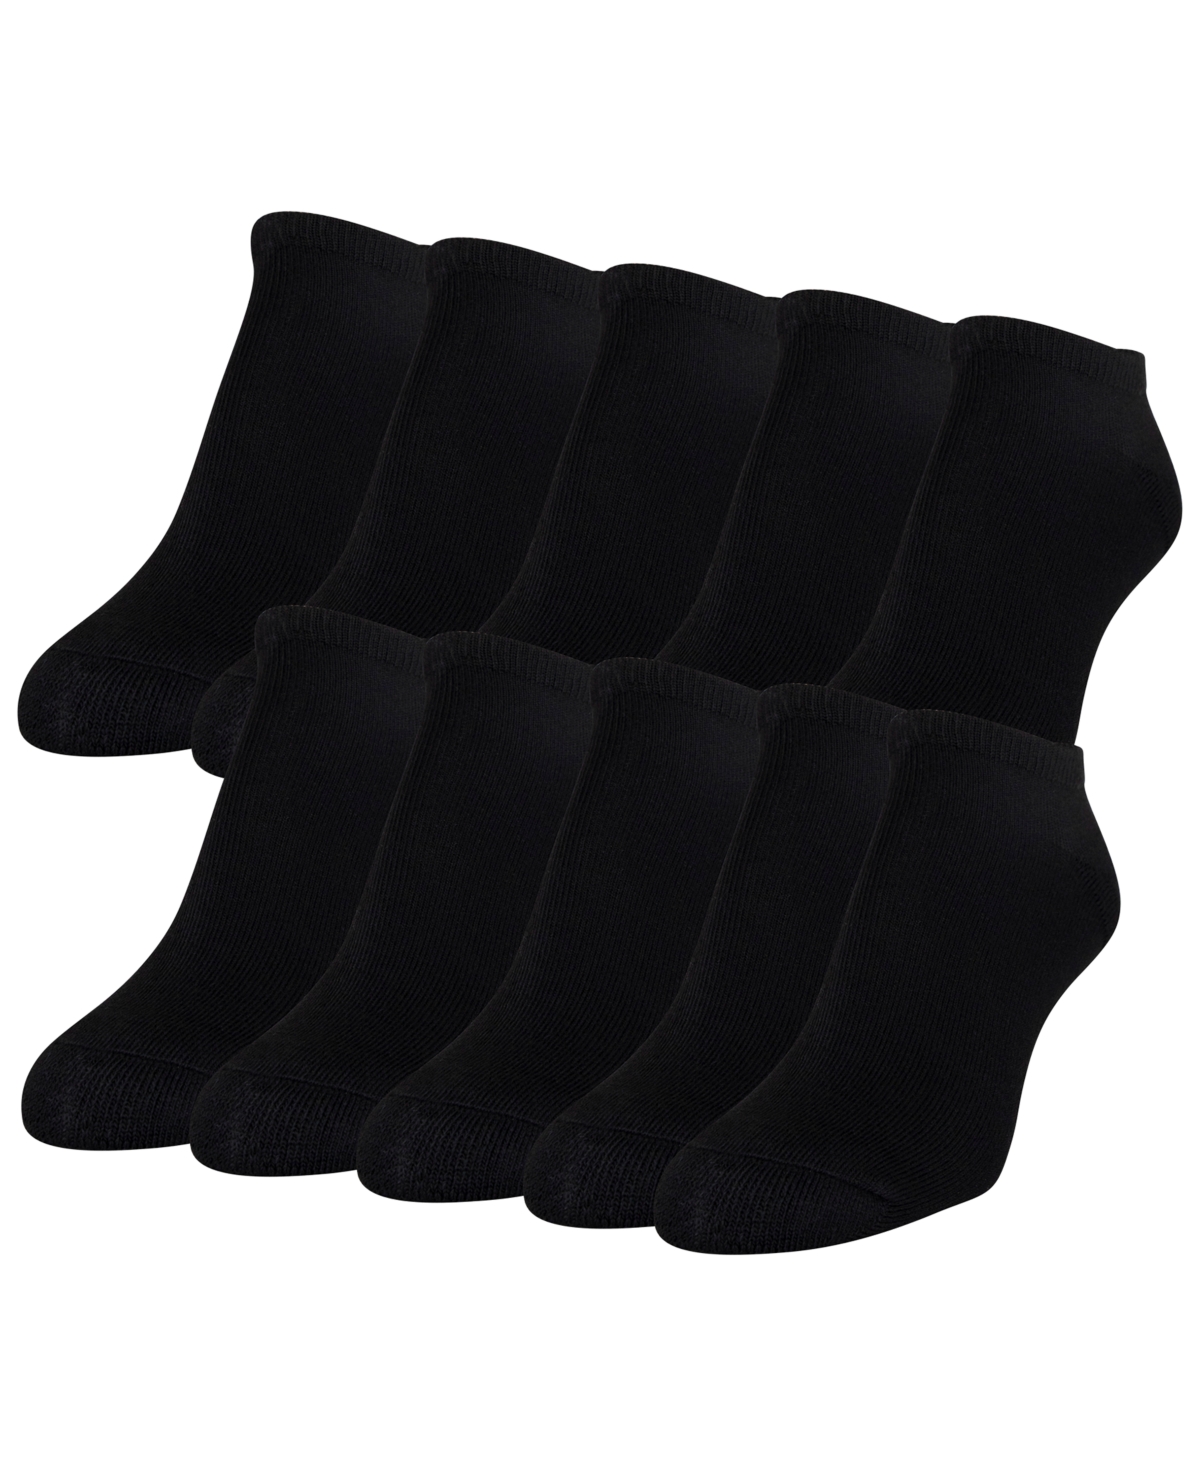 Women's 10-Pack Casual Cushion Heel And Toe No-Show Socks - White